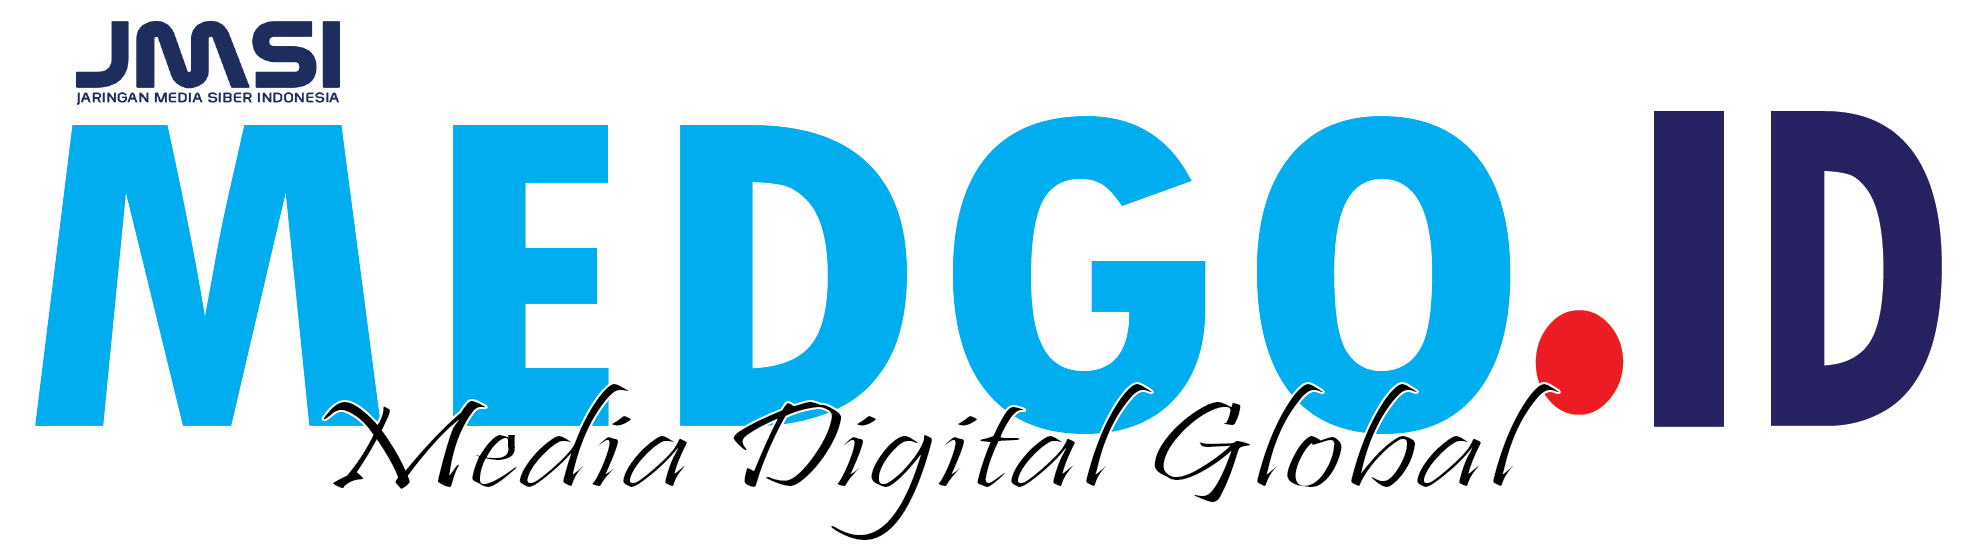 MEDGO.ID Media Digital Global